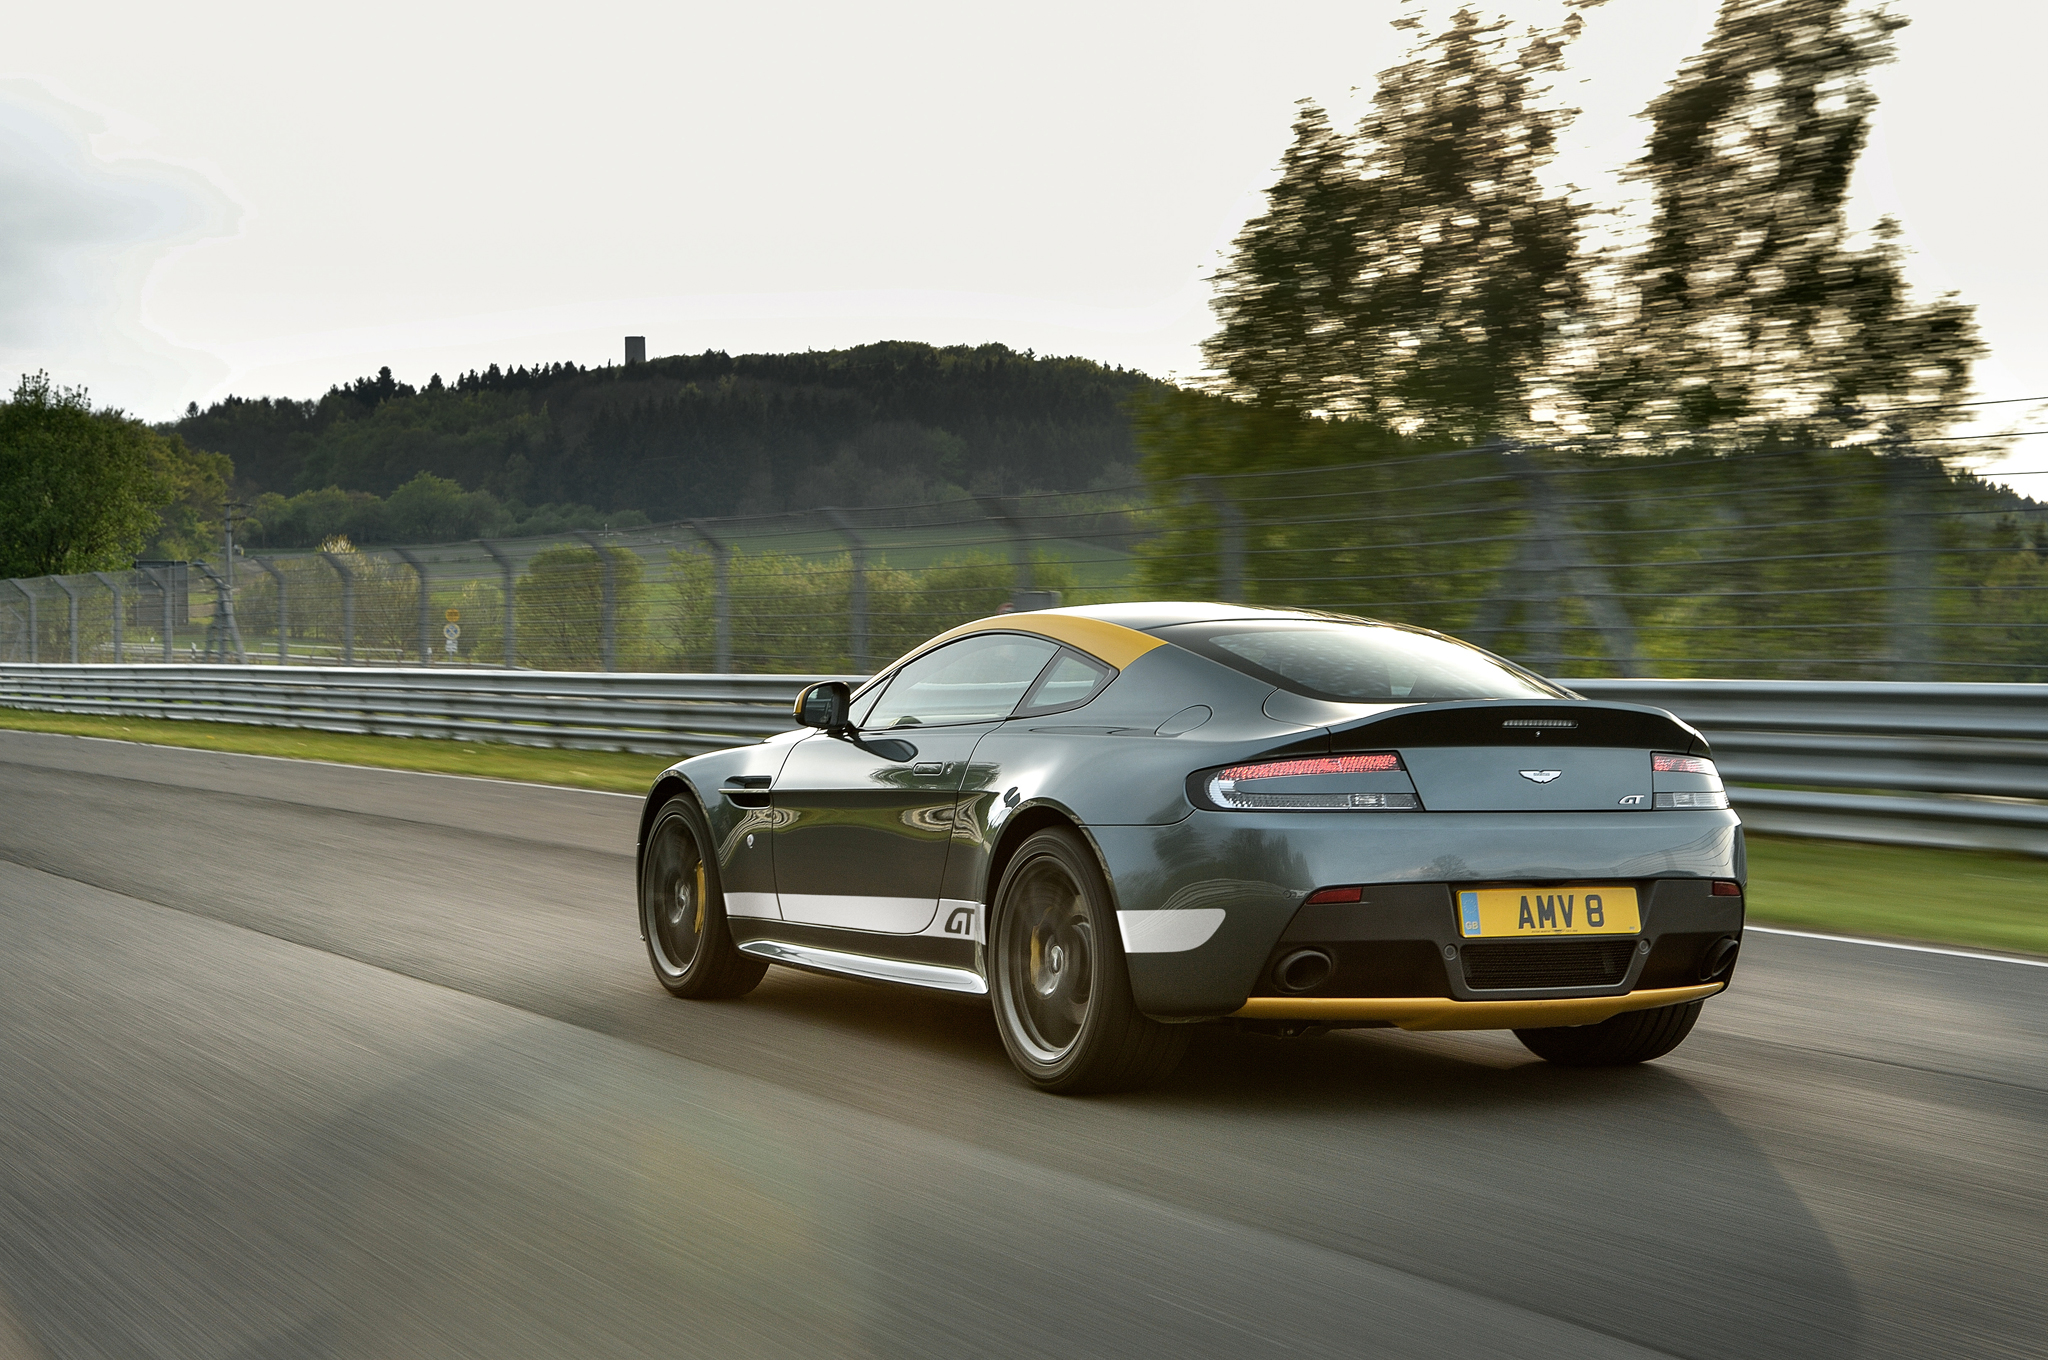 Aston Martin Vantage Backgrounds on Wallpapers Vista